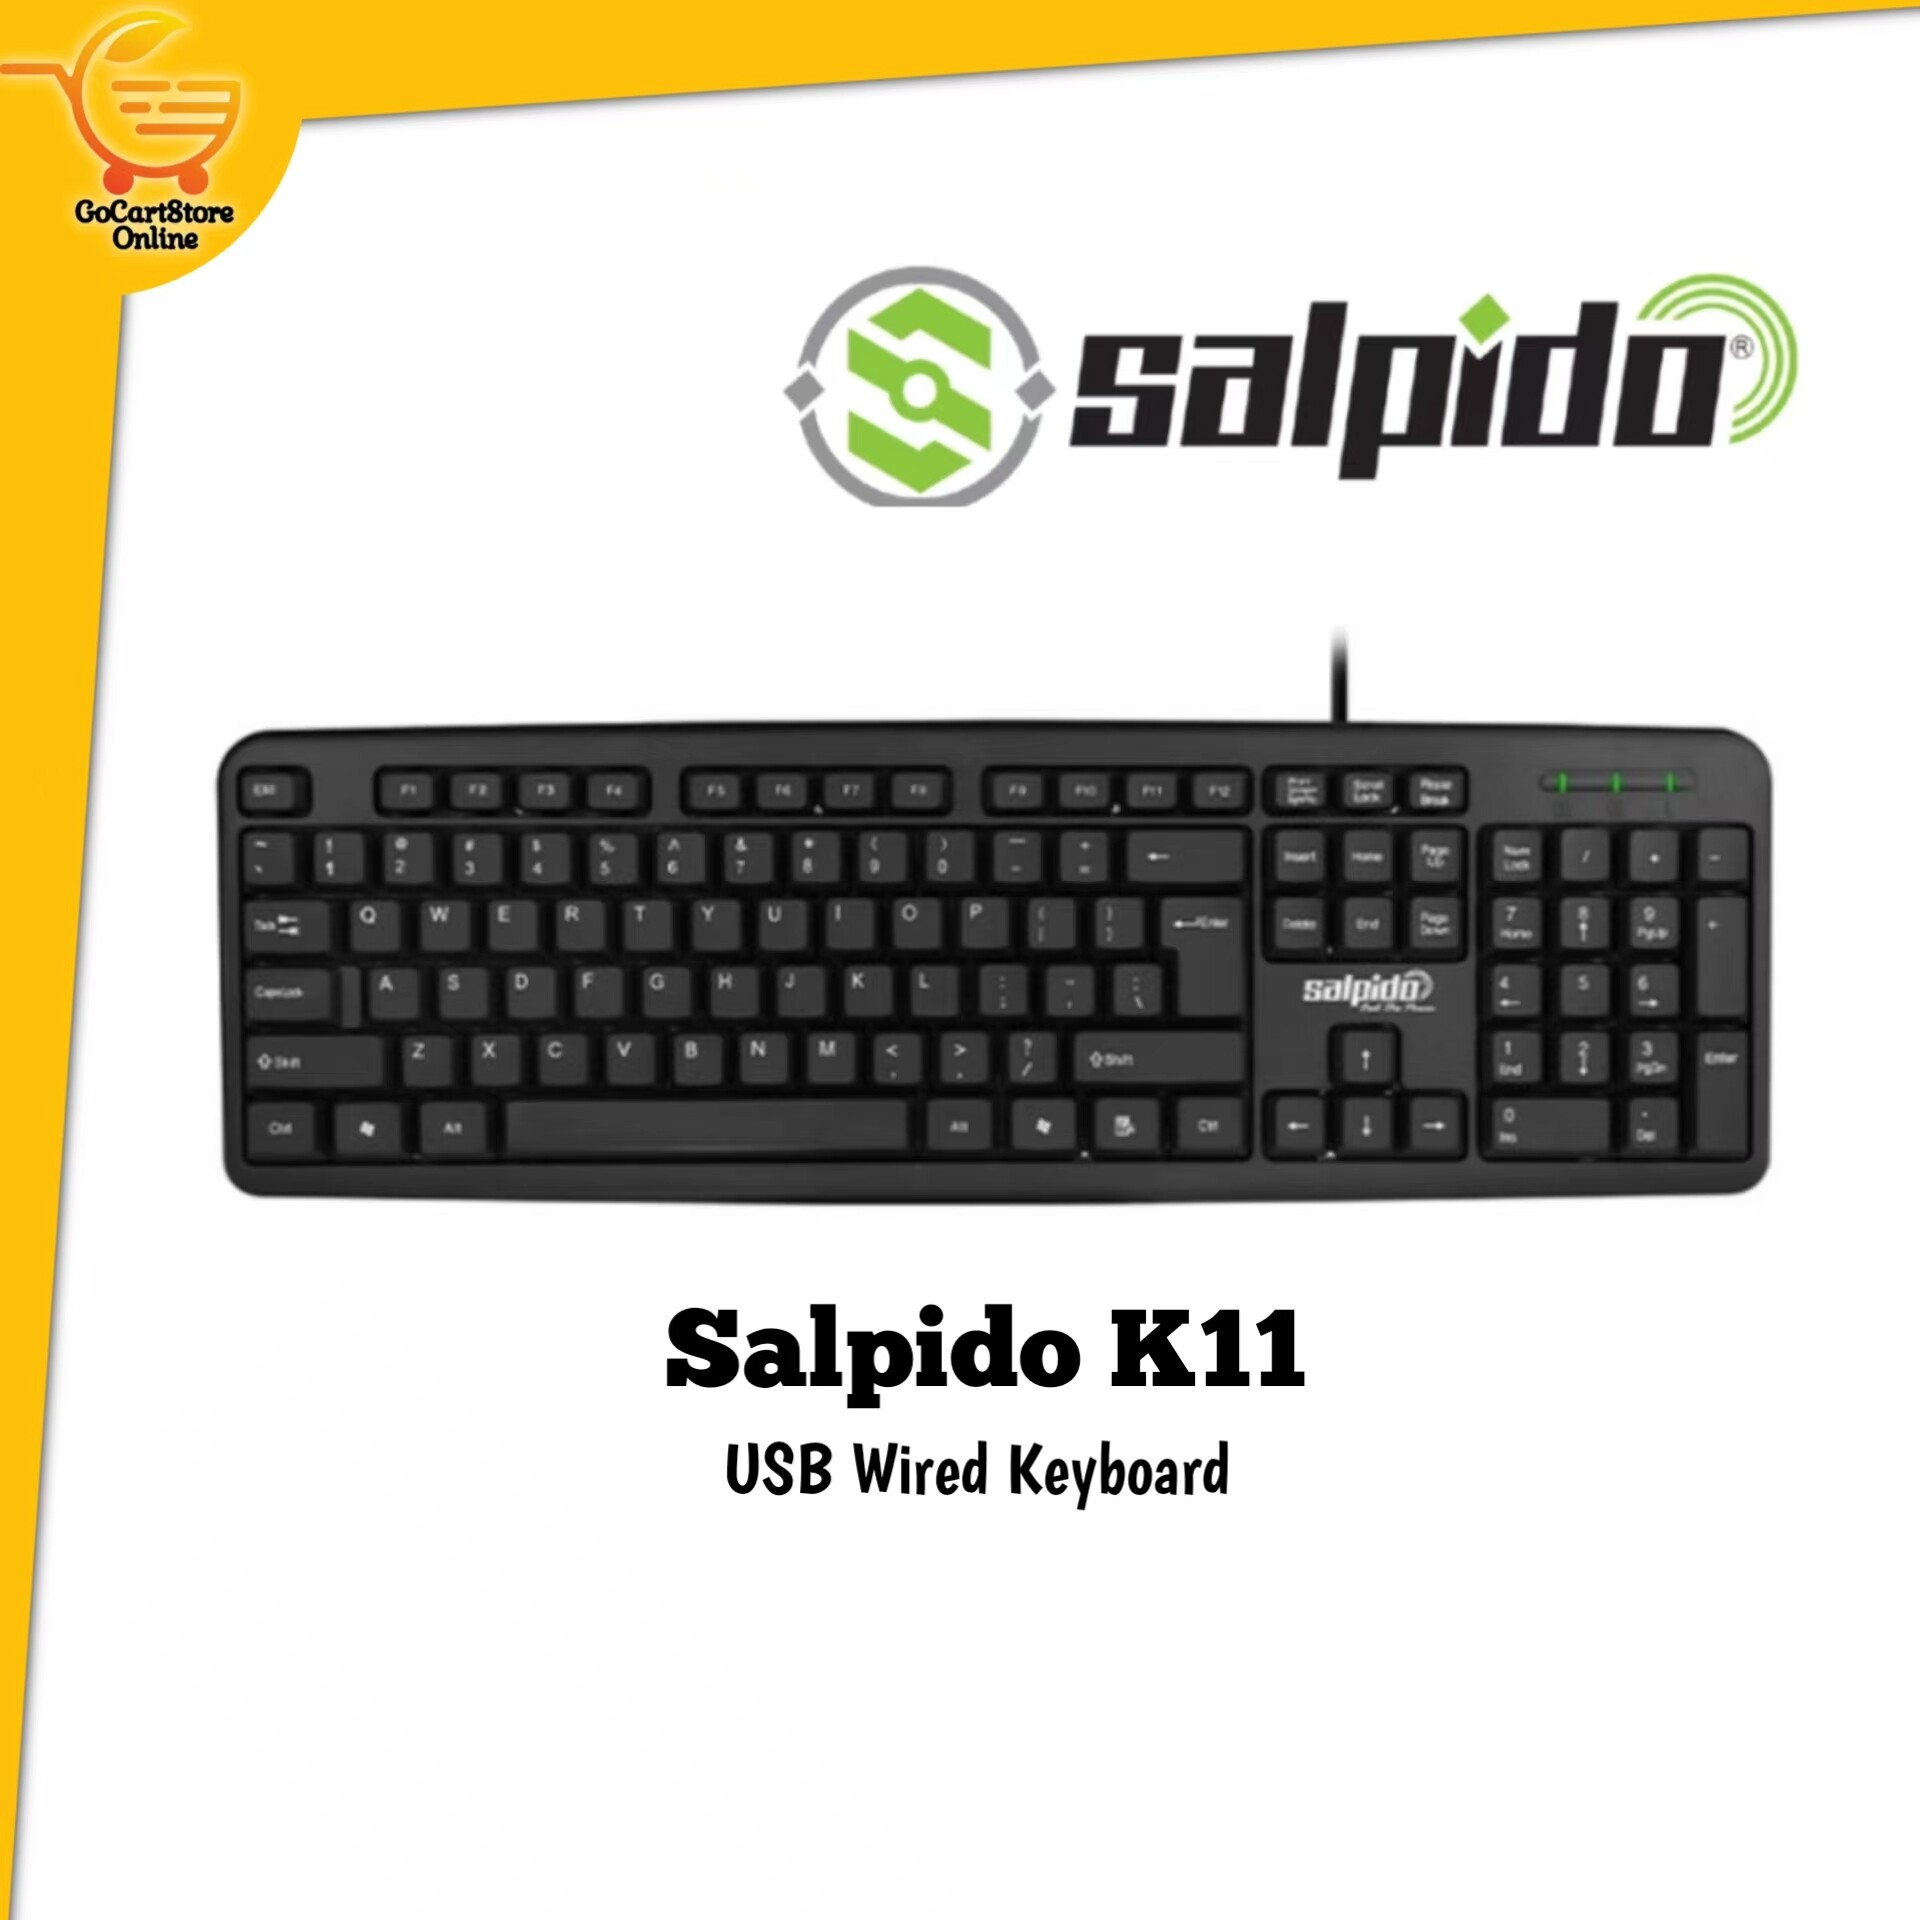 Salpido G120  Wireless Multimedia Combo Keyboard Mouse | Lazada